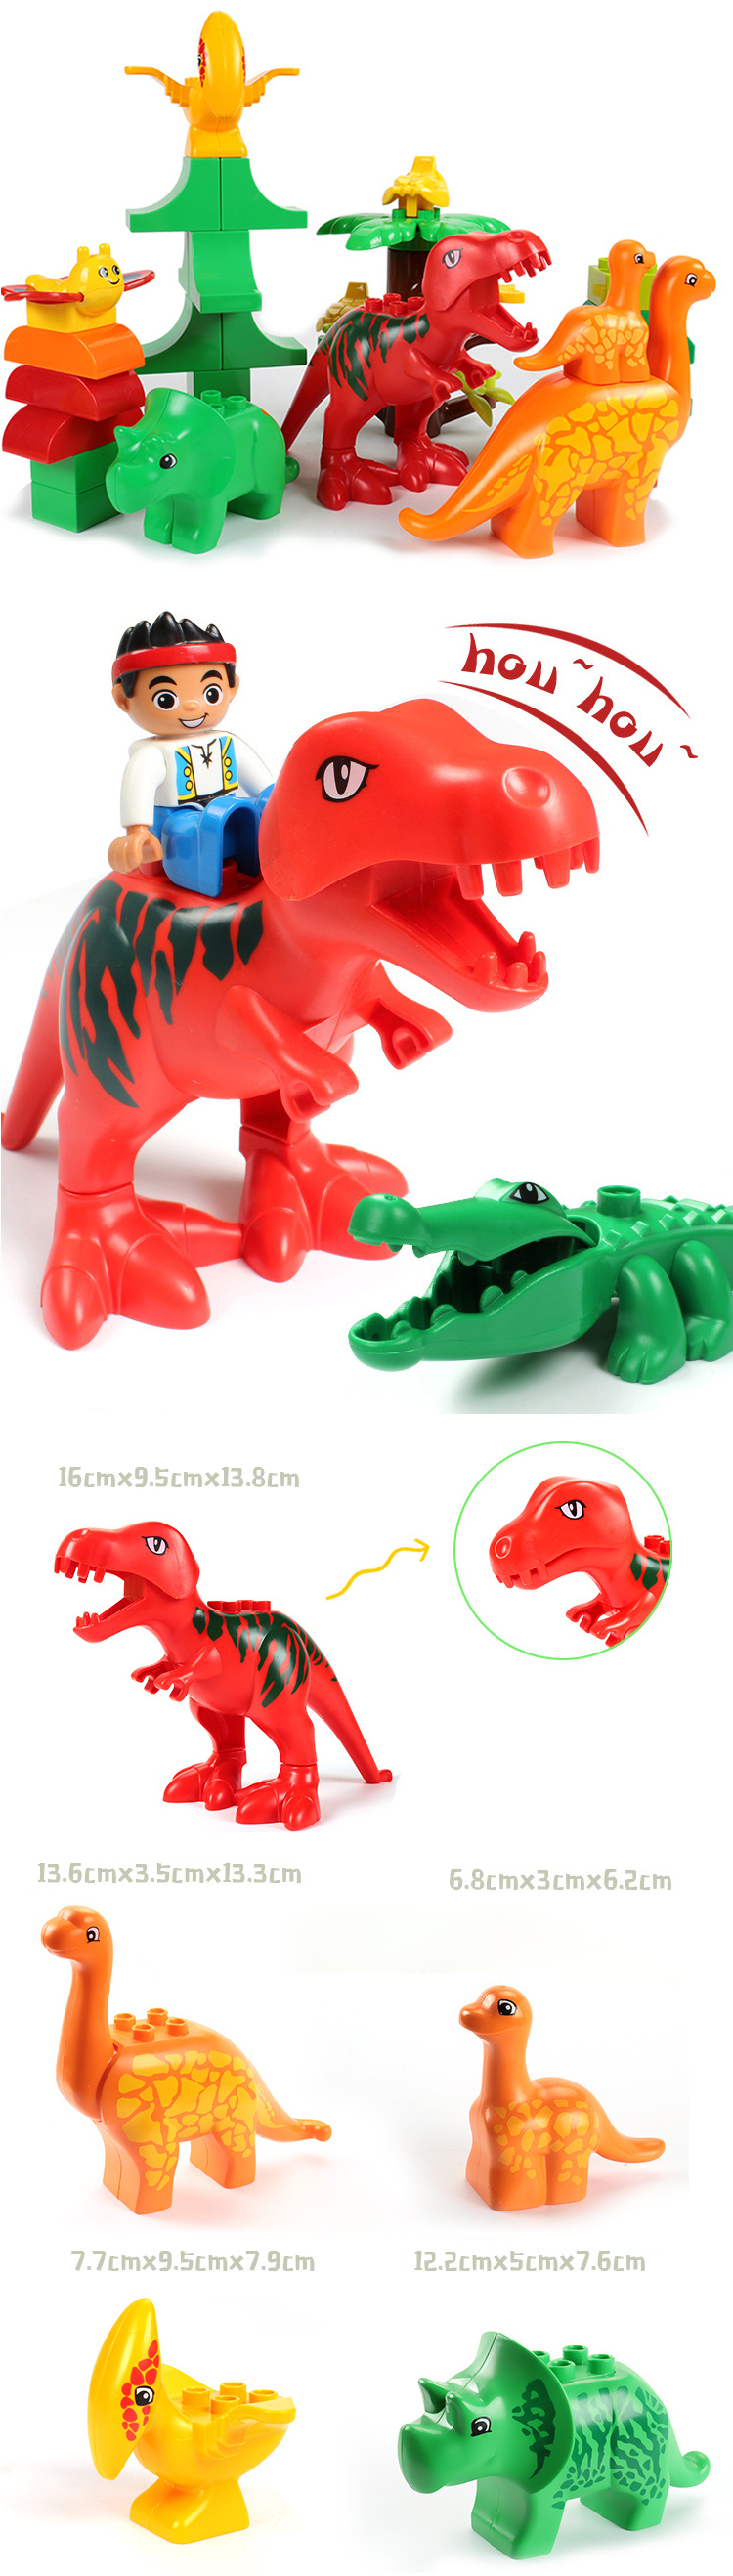 WOMA TOYS Compatible major brands bricks animal dinosaur building blocks for kids children age 3+